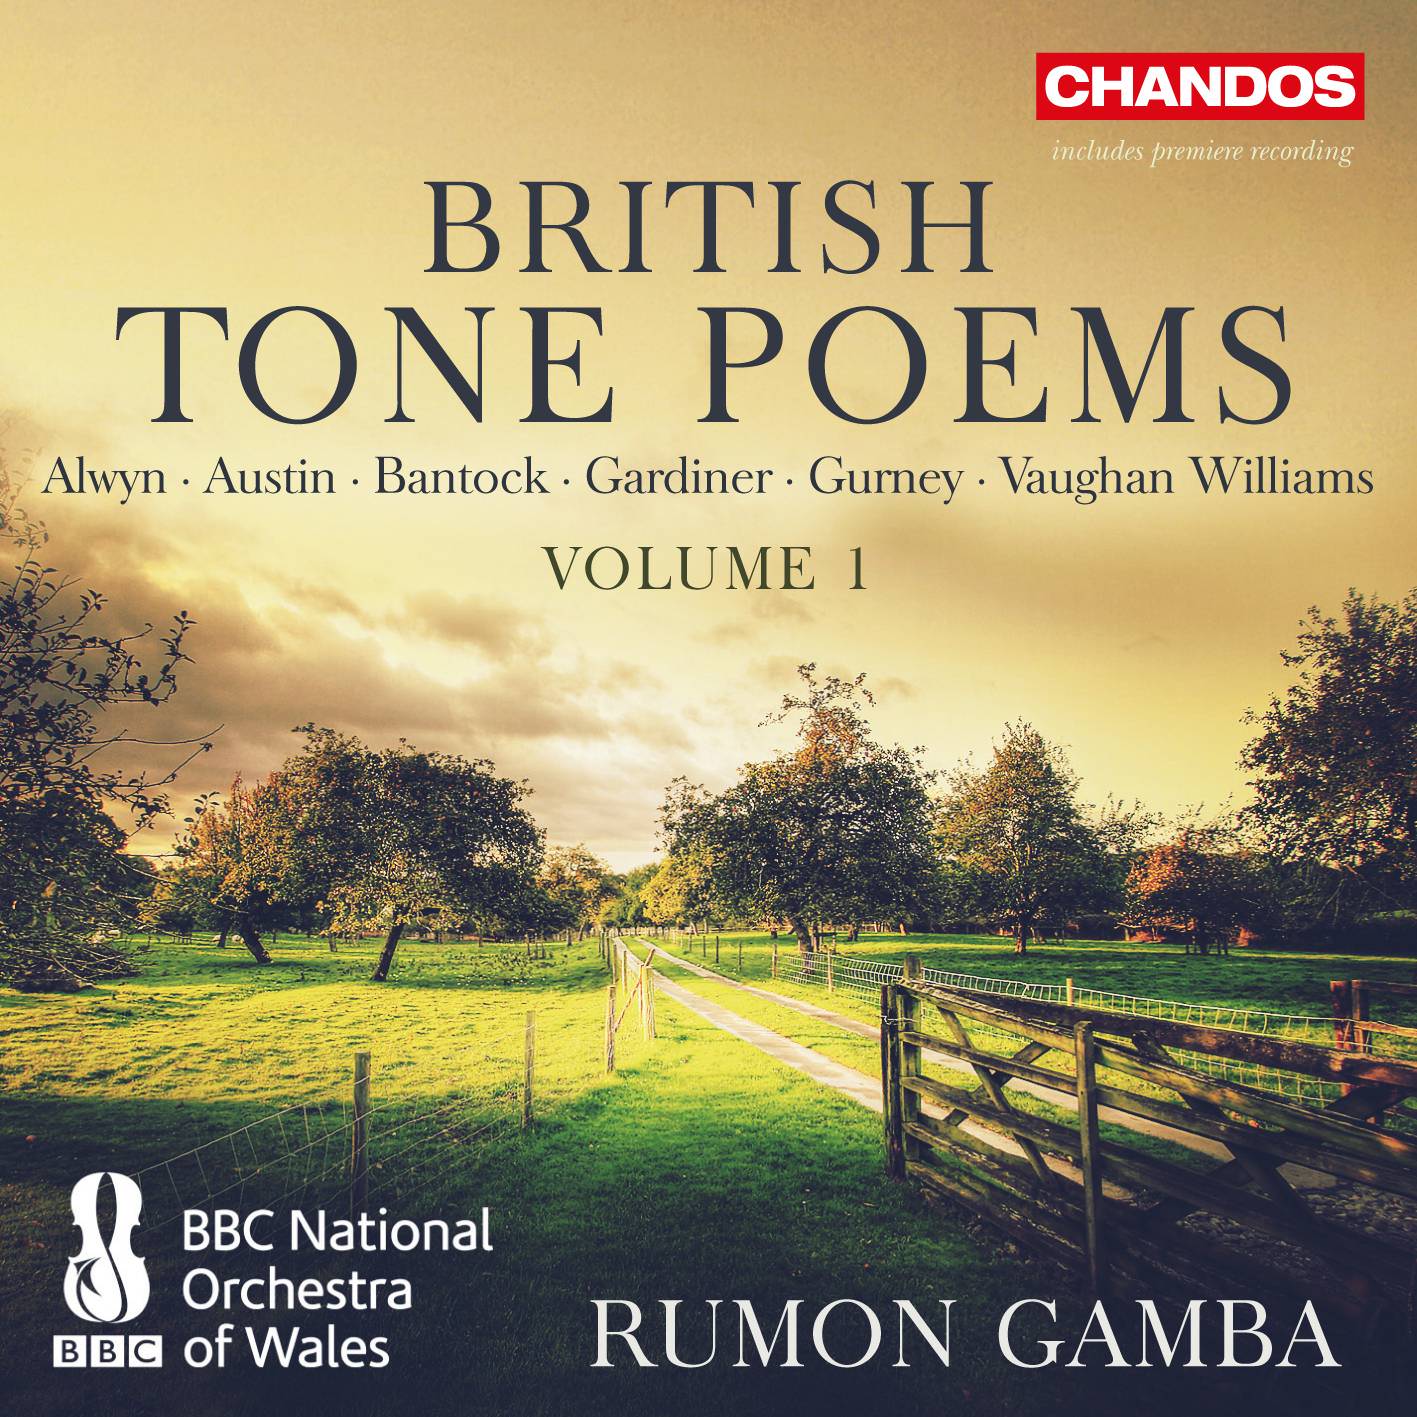 BBC National Orchestra of Wales & Rumon Gamba - British Tone Poems, Vol. 1 (2017) [FLAC 24bit/96kHz]